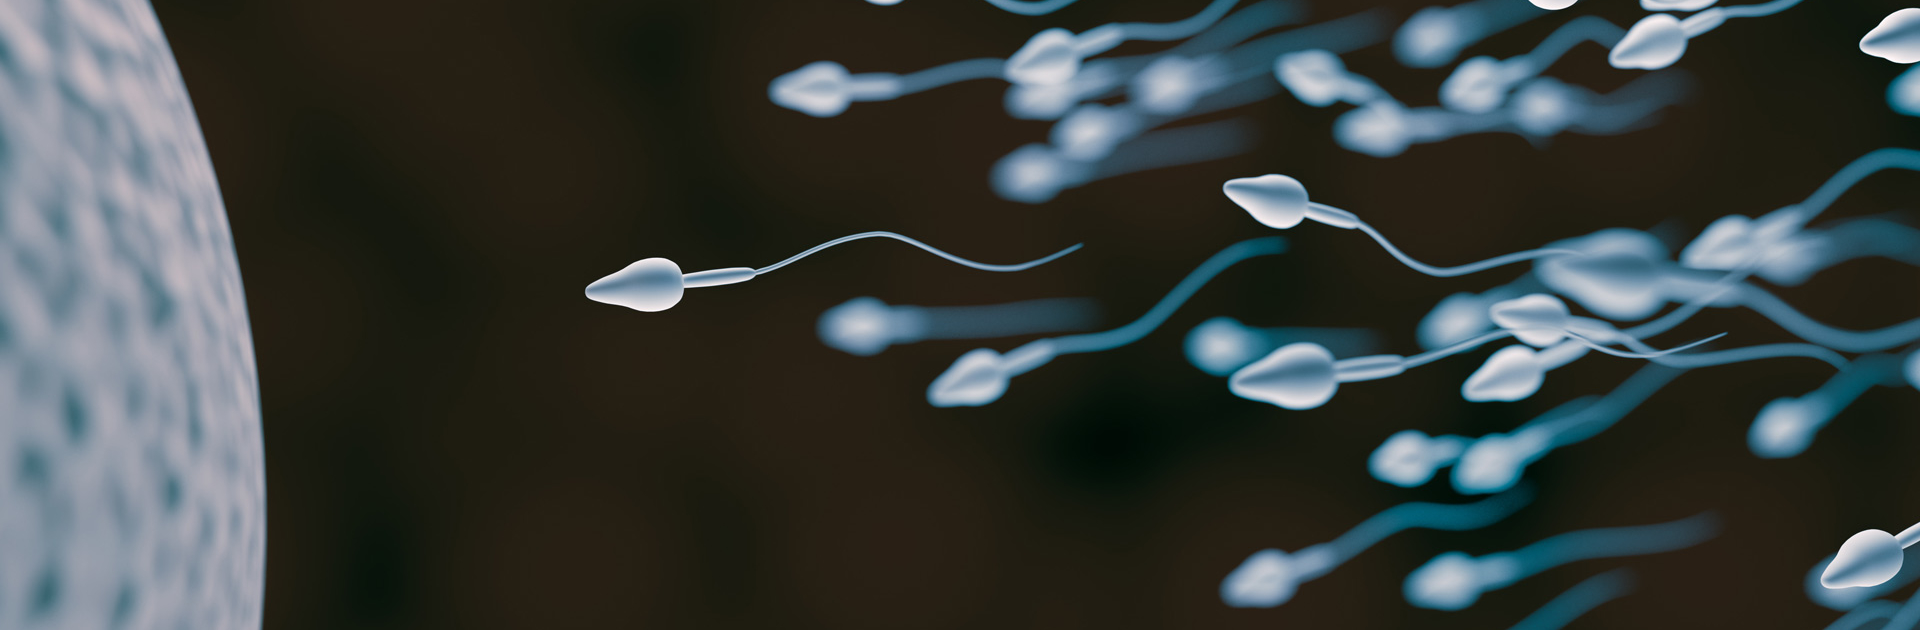 сперма вне организма фото 64